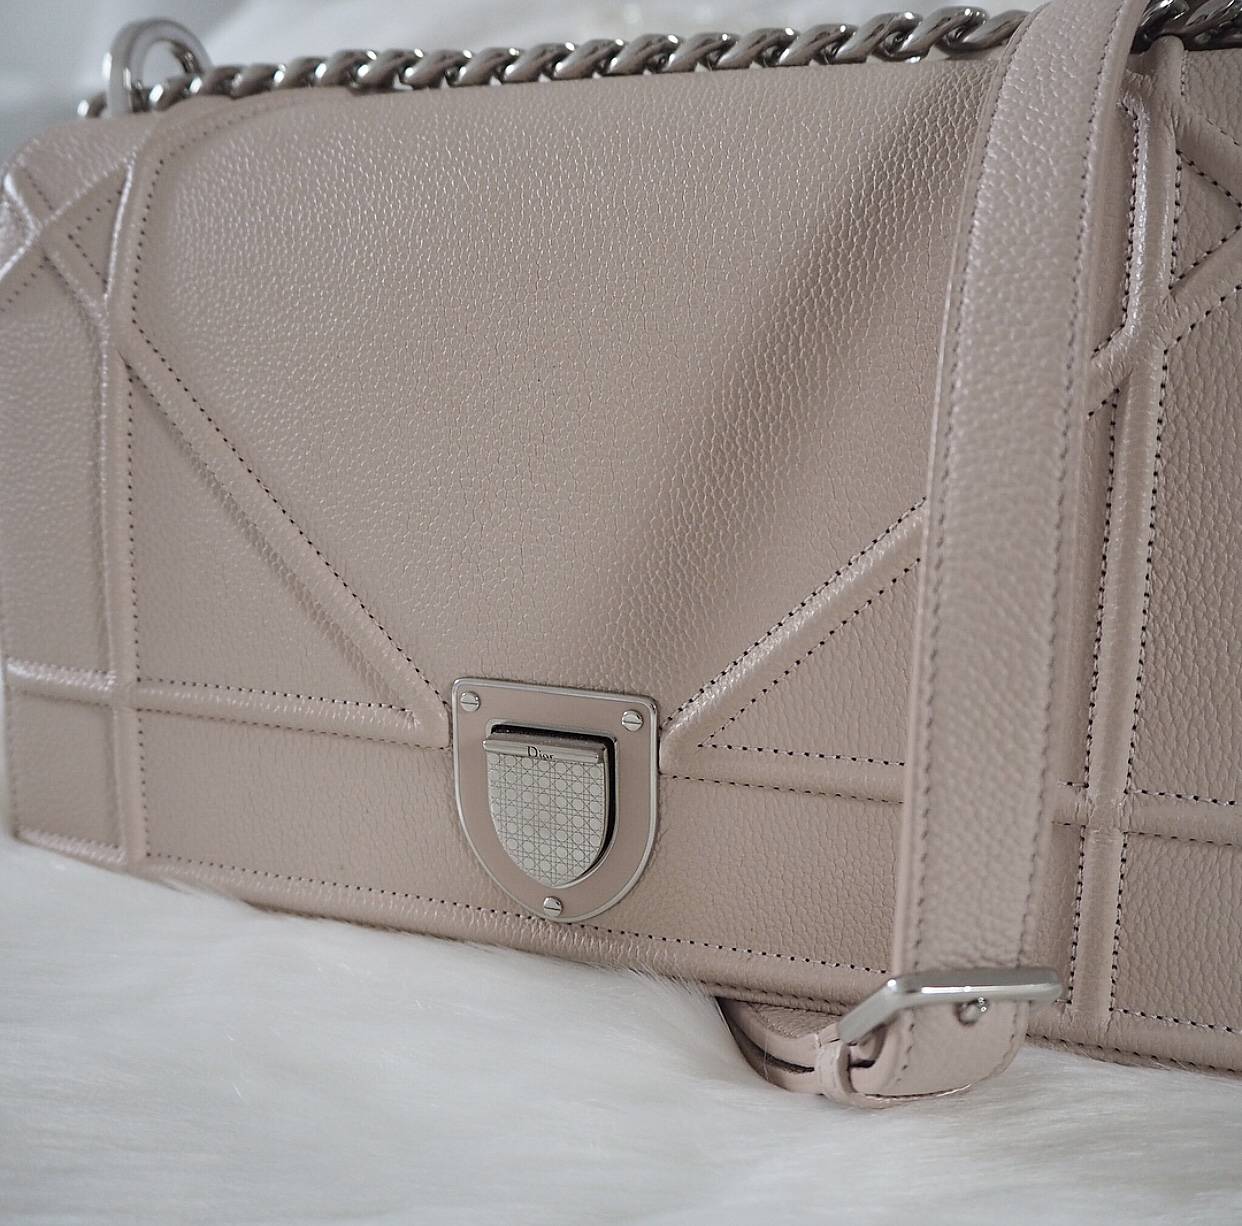 The Dior Diorama Handbag in Powder Pink